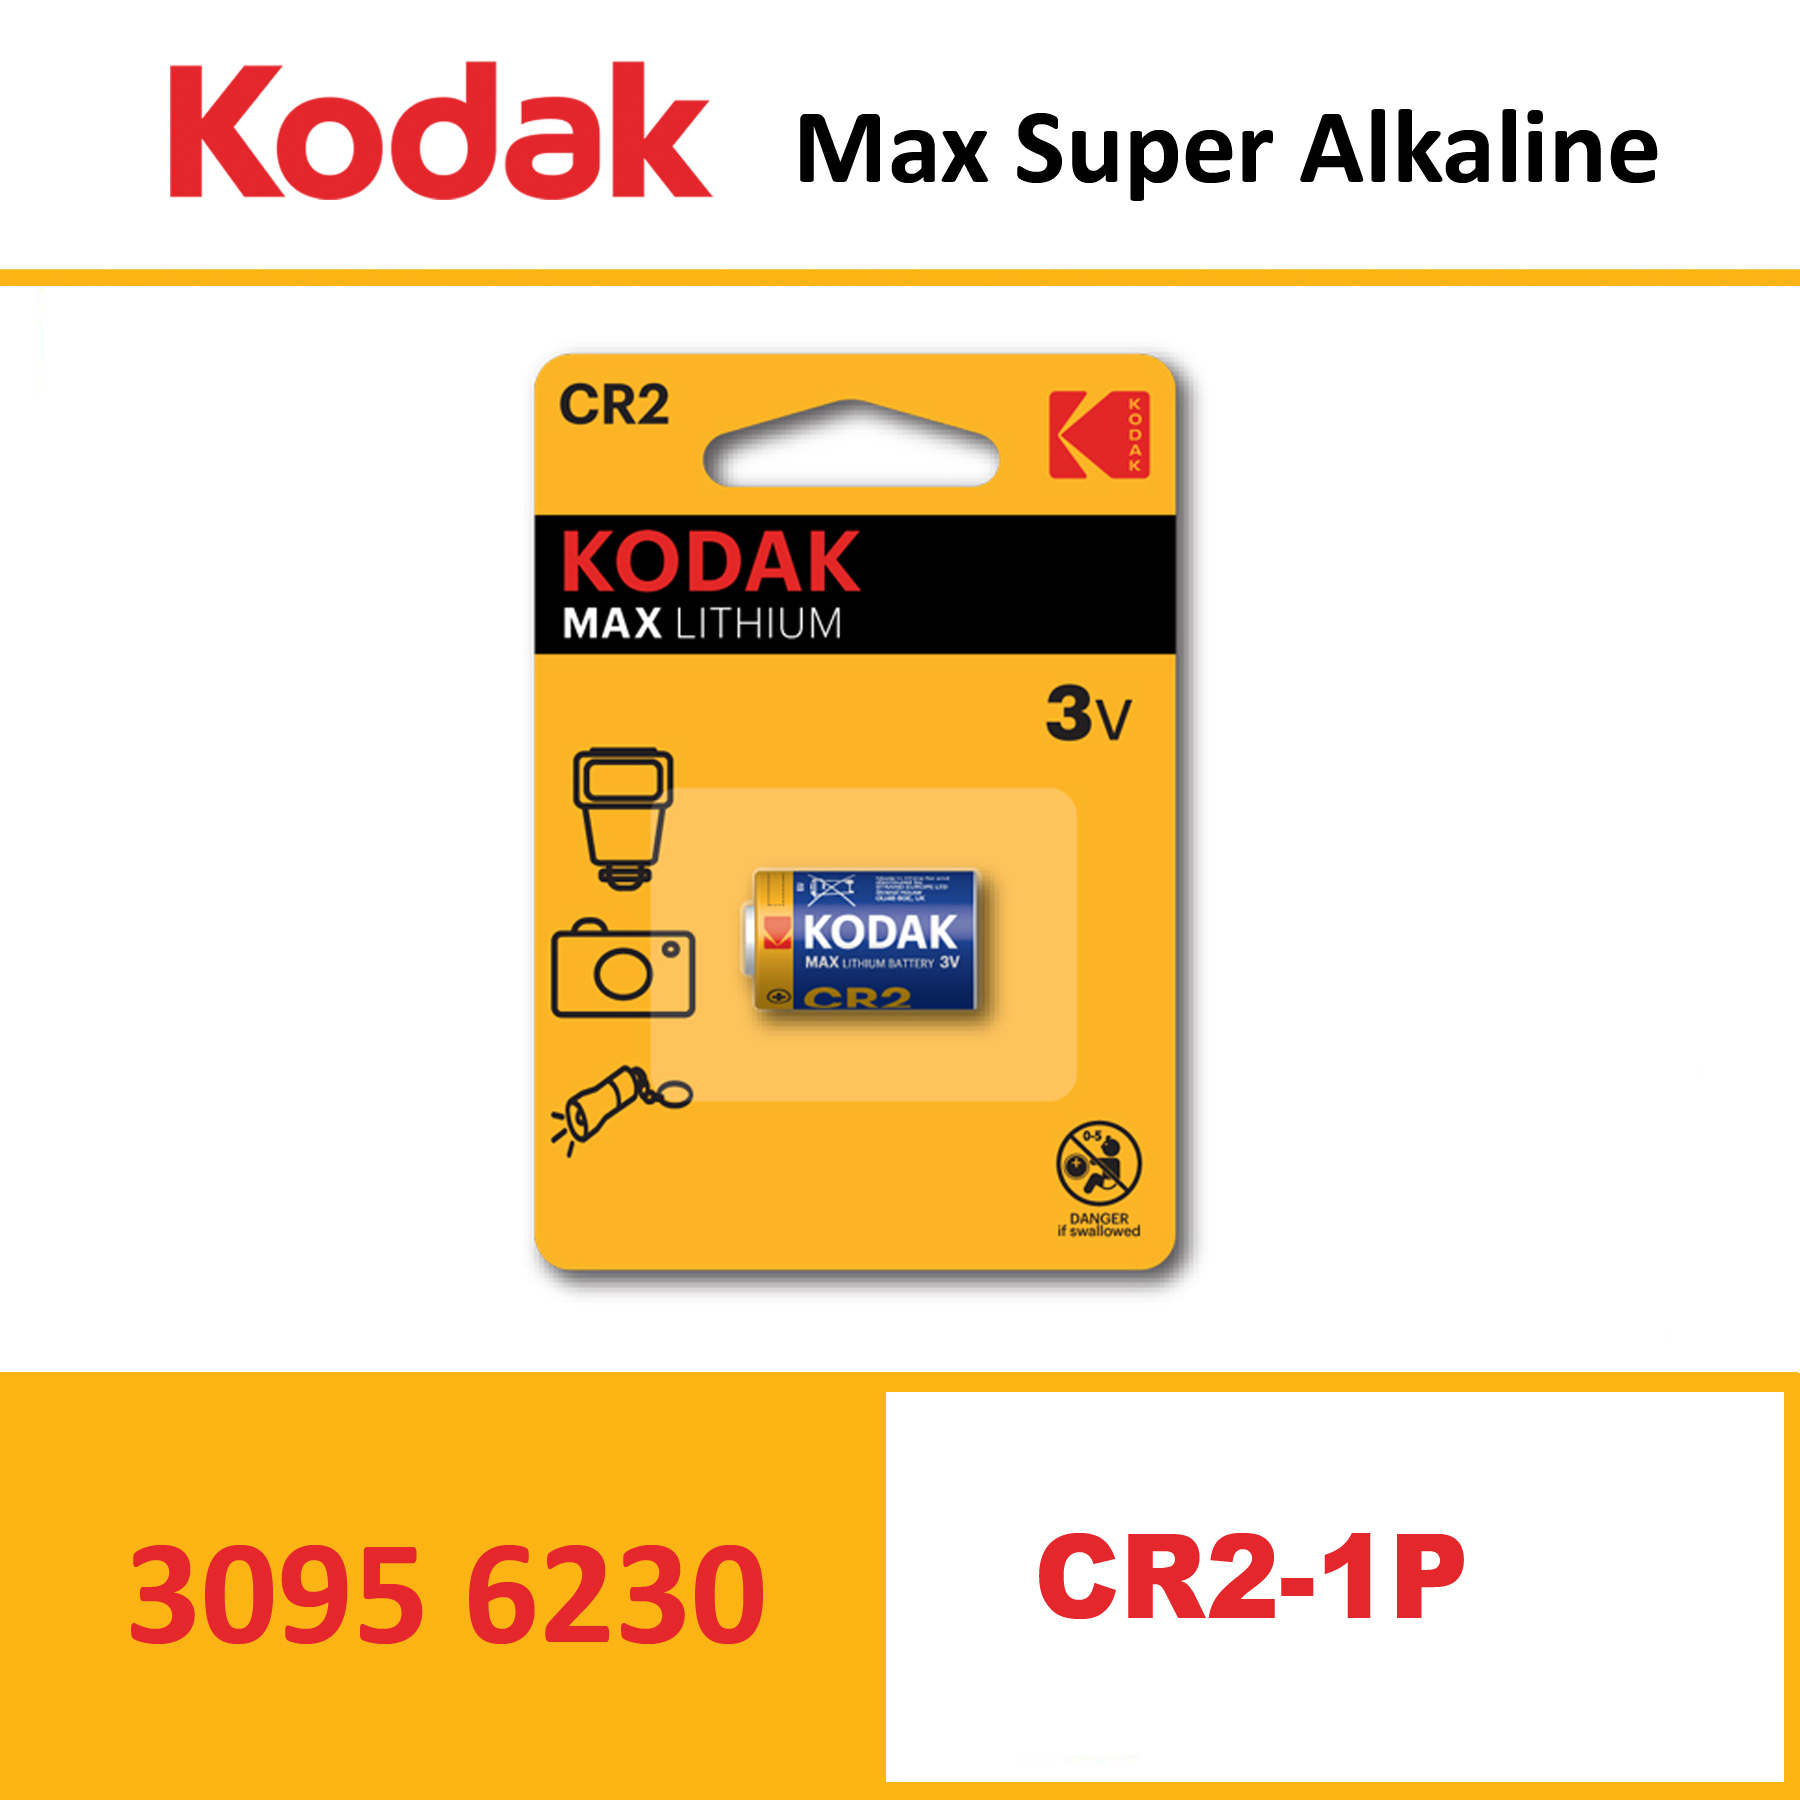 KODAK KCR2 MAX Lithium battery